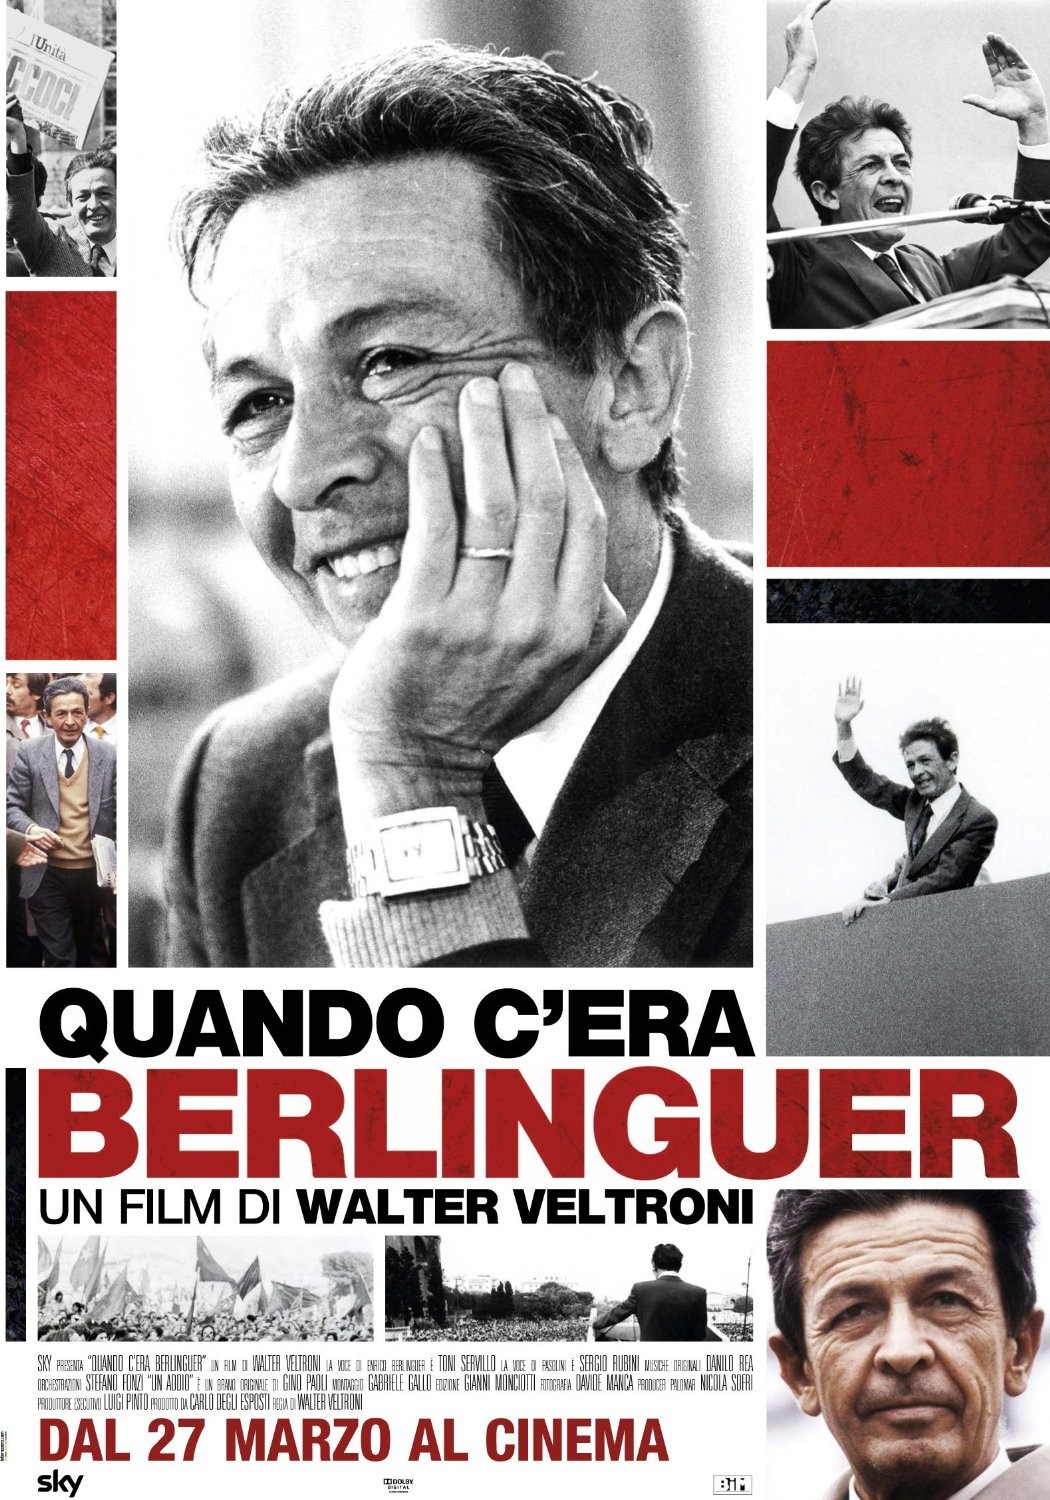 Extra Large Movie Poster Image for Quando c'era Berlinguer 